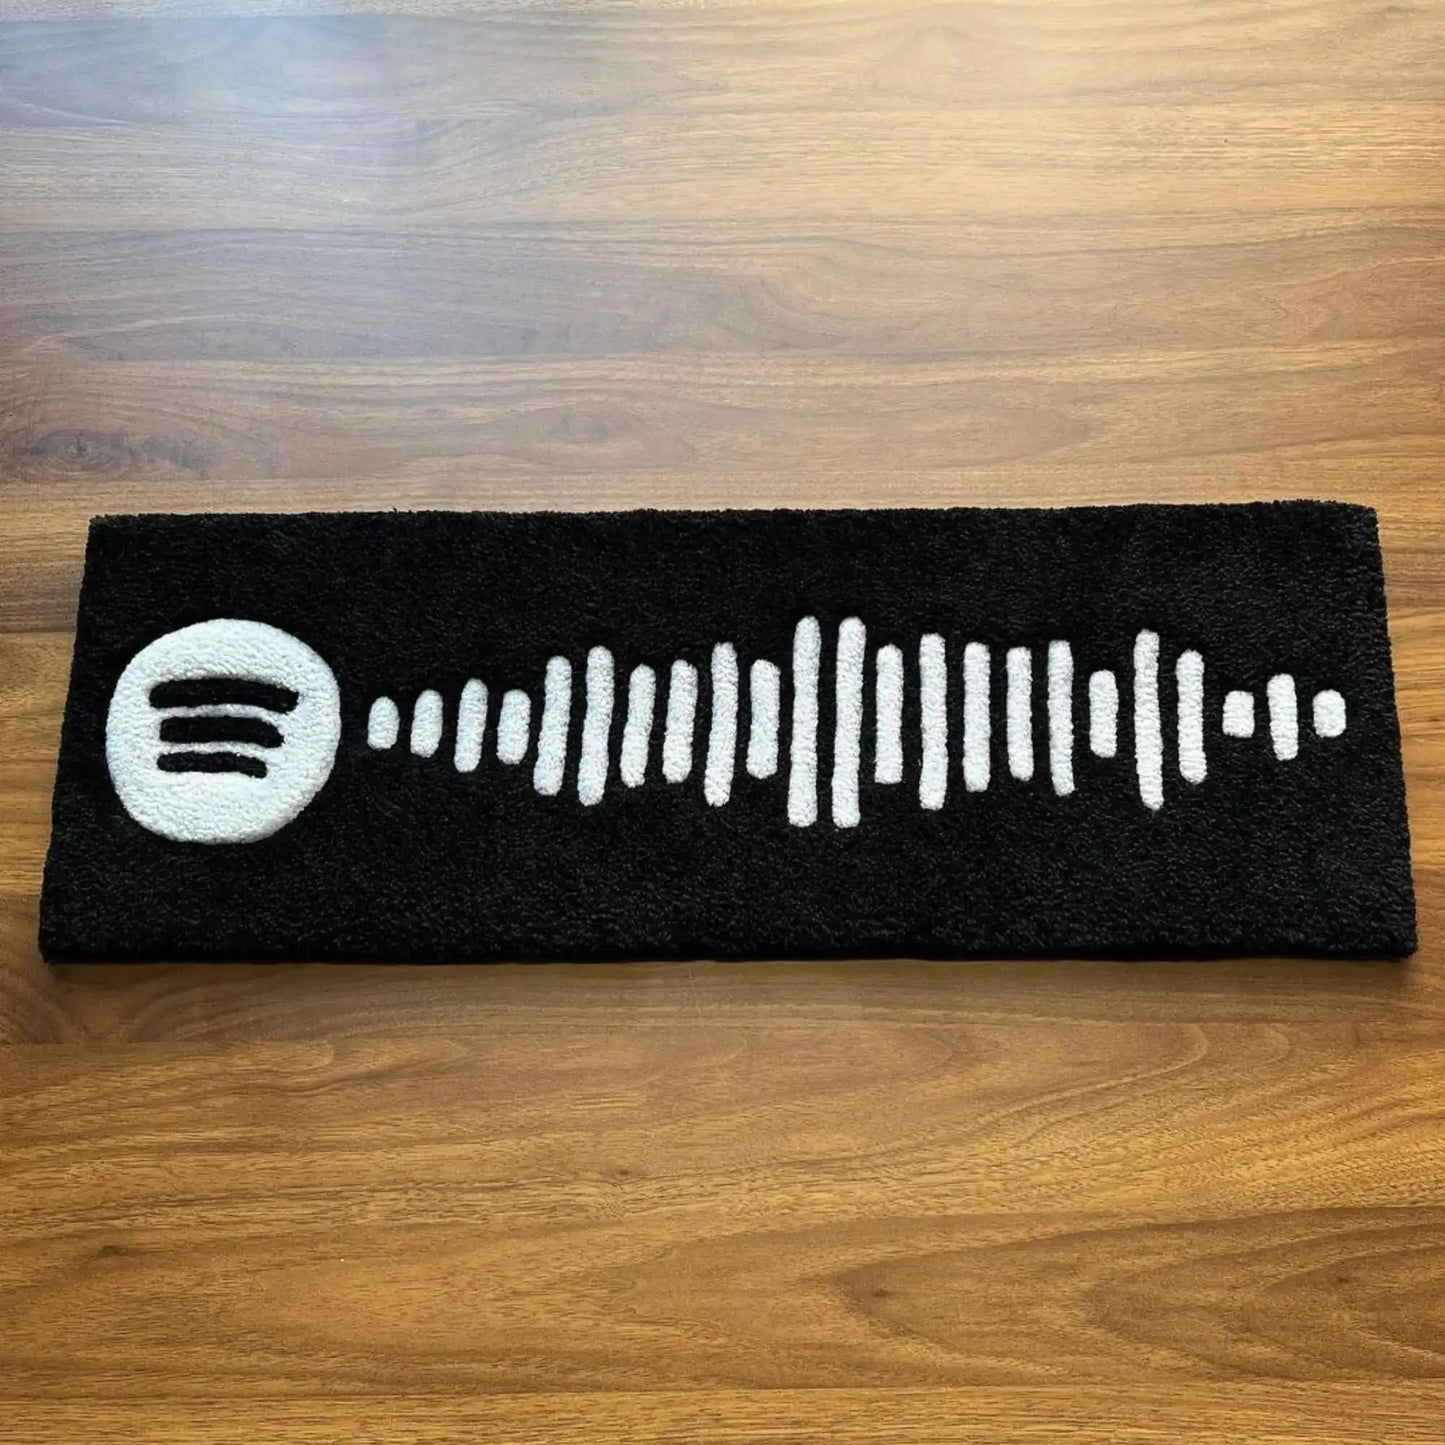 Spotify Music Codes Rug - Digital Print, Handmade Non-Slip Carpet